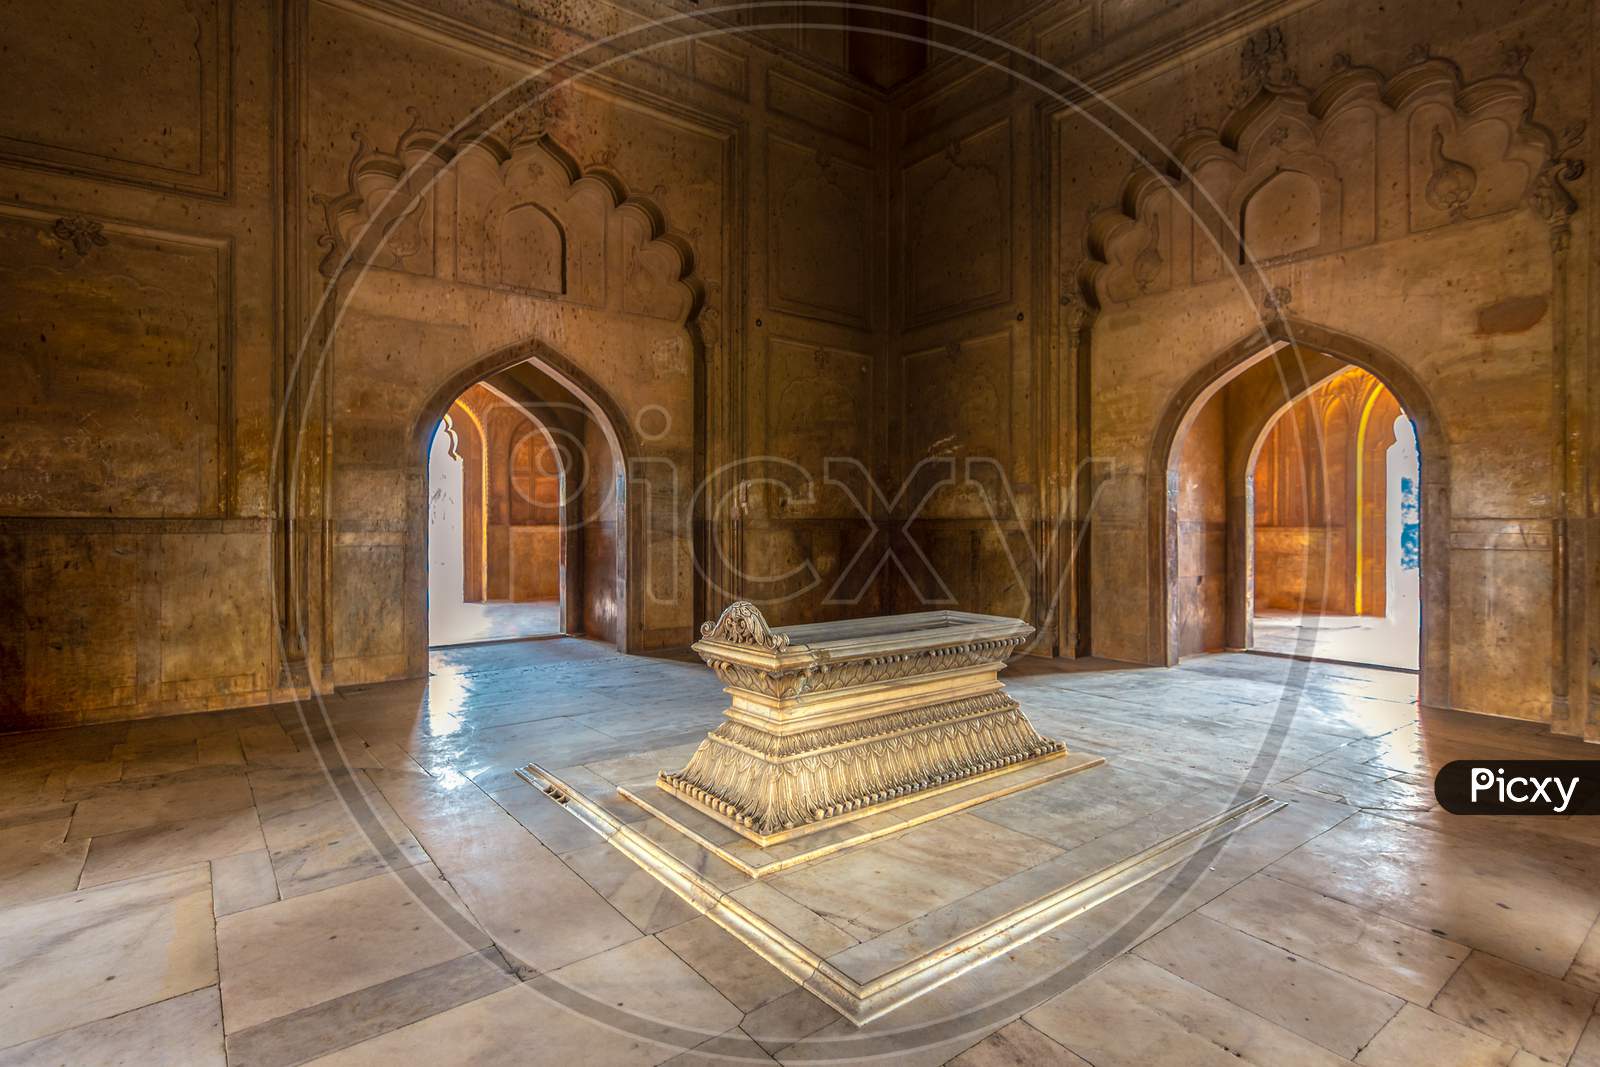 Grave Of Safdarjung At Safdarjung'S Tomb, Mughal Style Mausoleum Built In 1754 In New Delhi, India